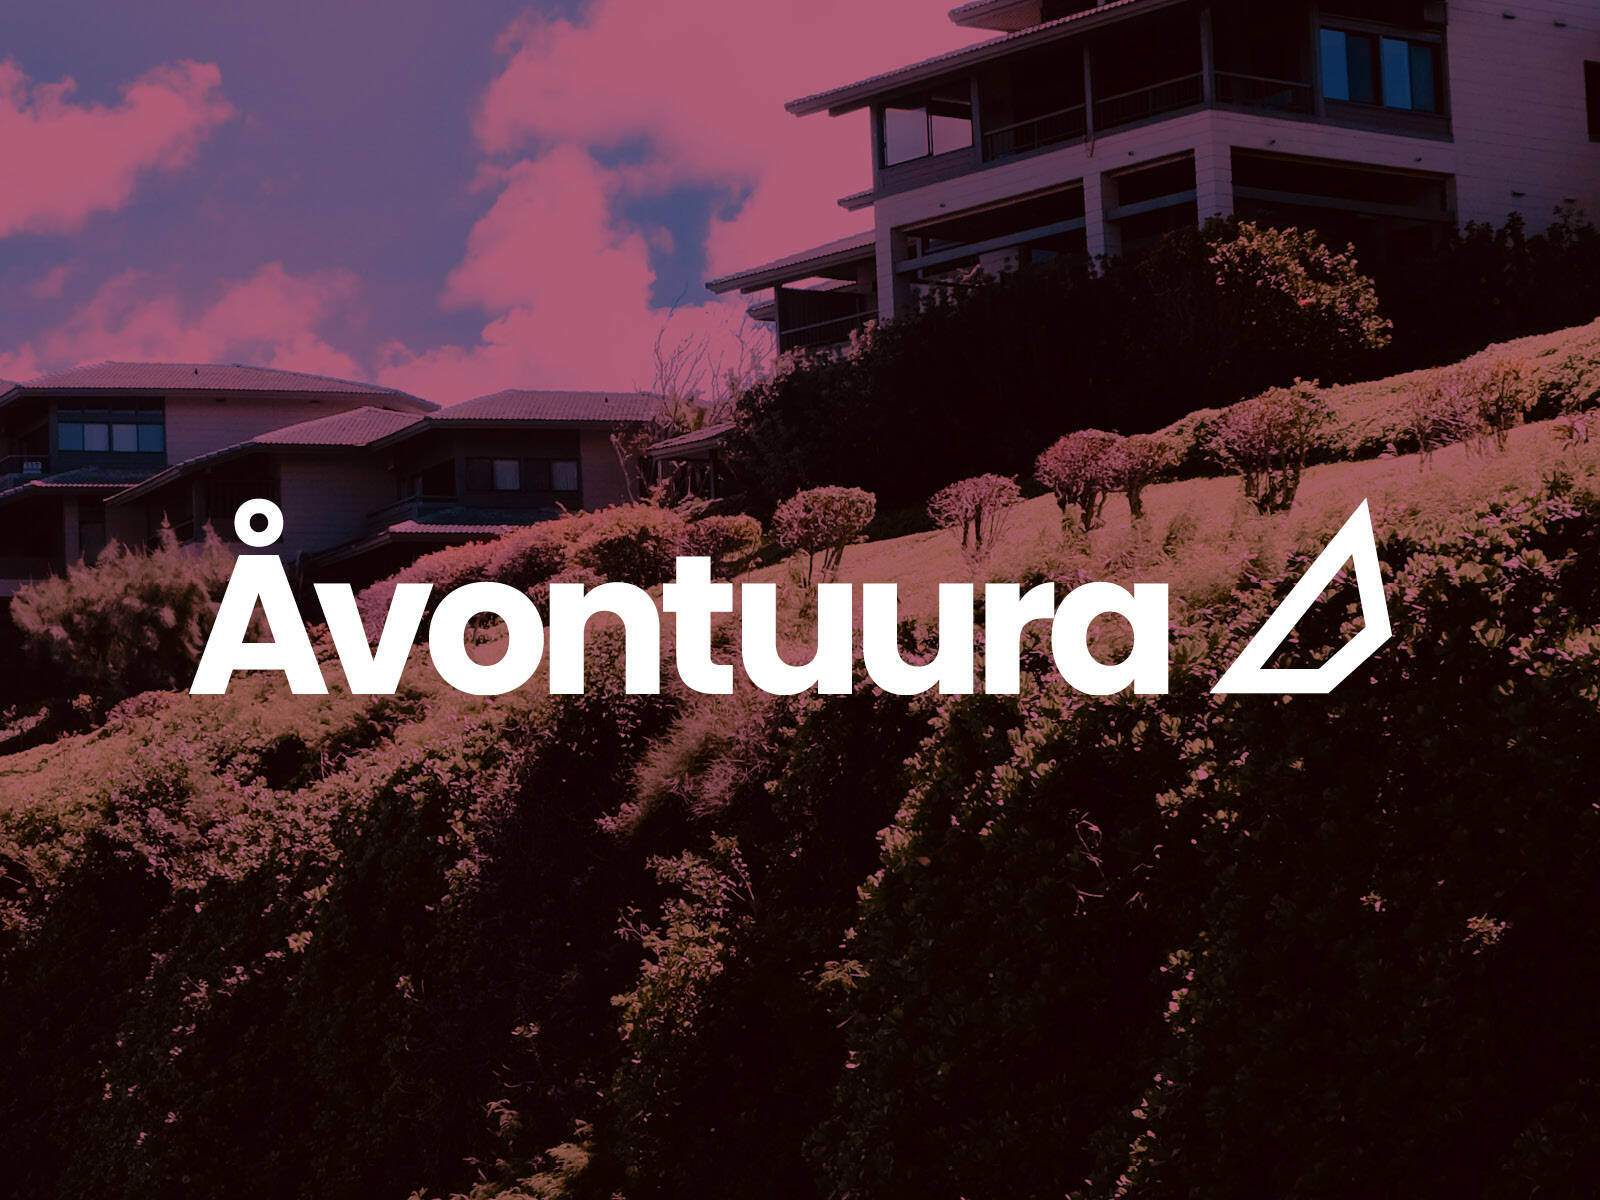 Avonturra-canadian-travel-blog-brand-design-universe-ft